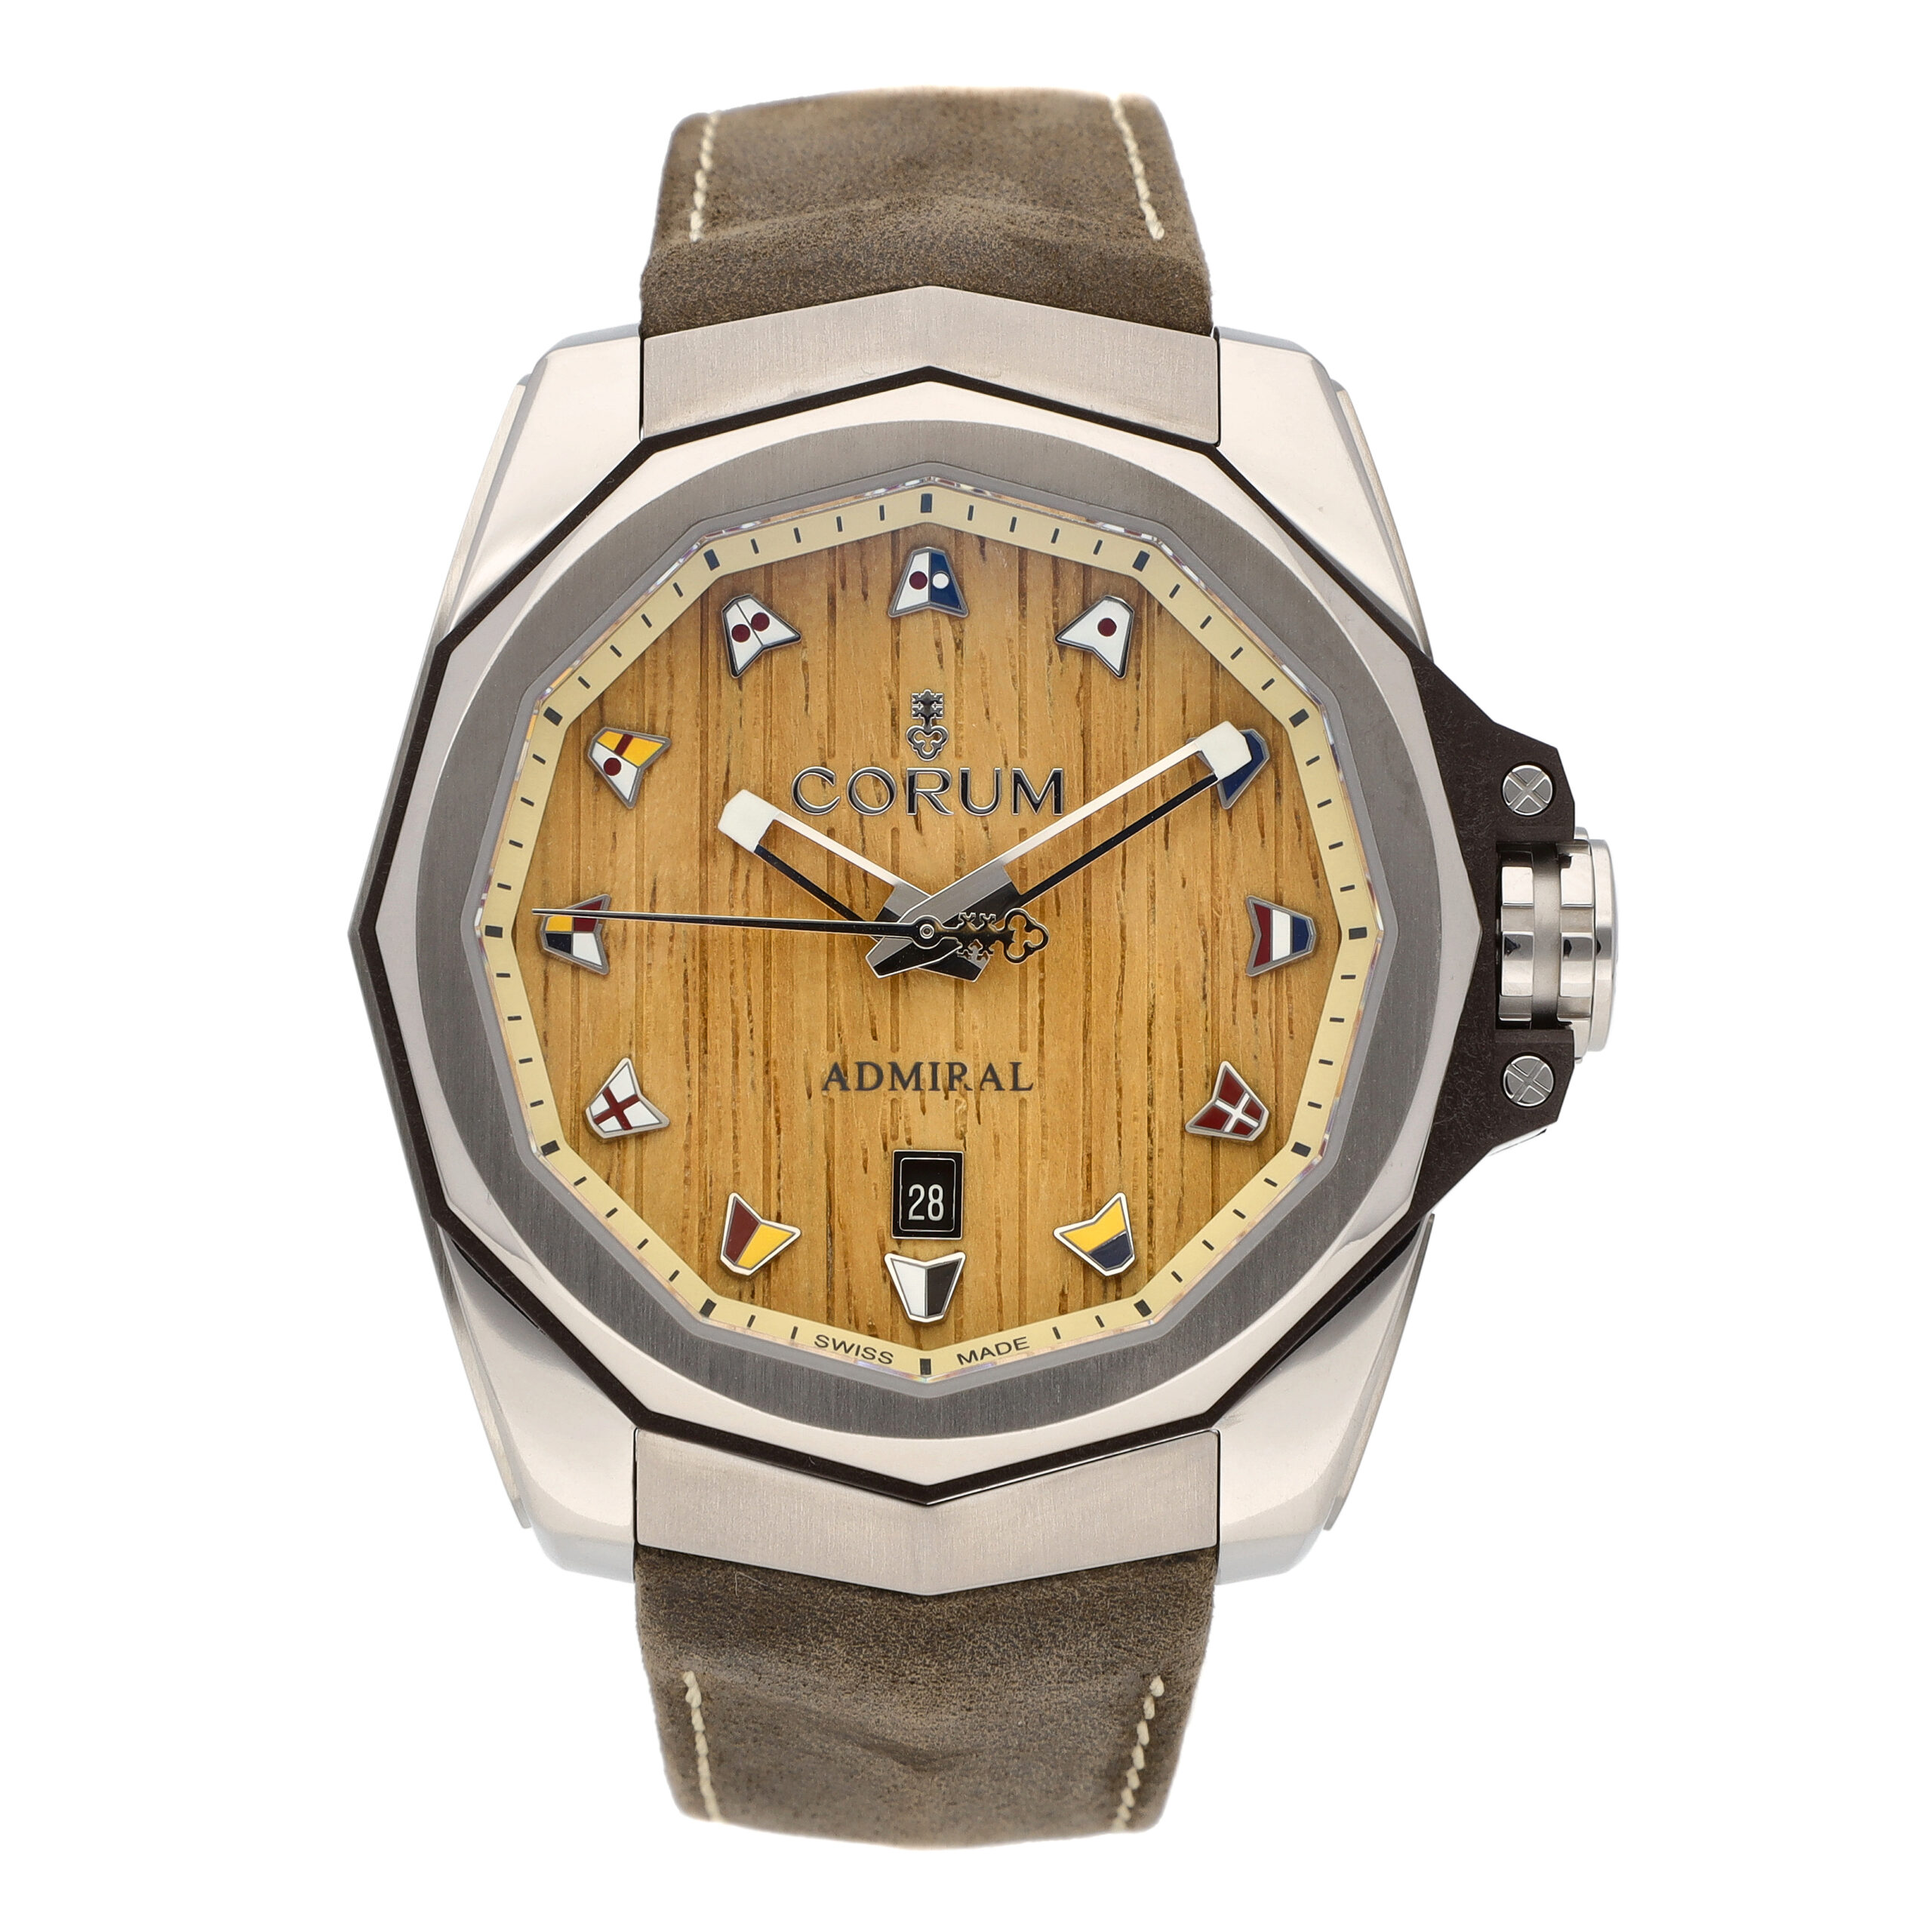 watchsteez.com – 1979 longines admiral 1059 5-star automatic presentation  watch w/ date